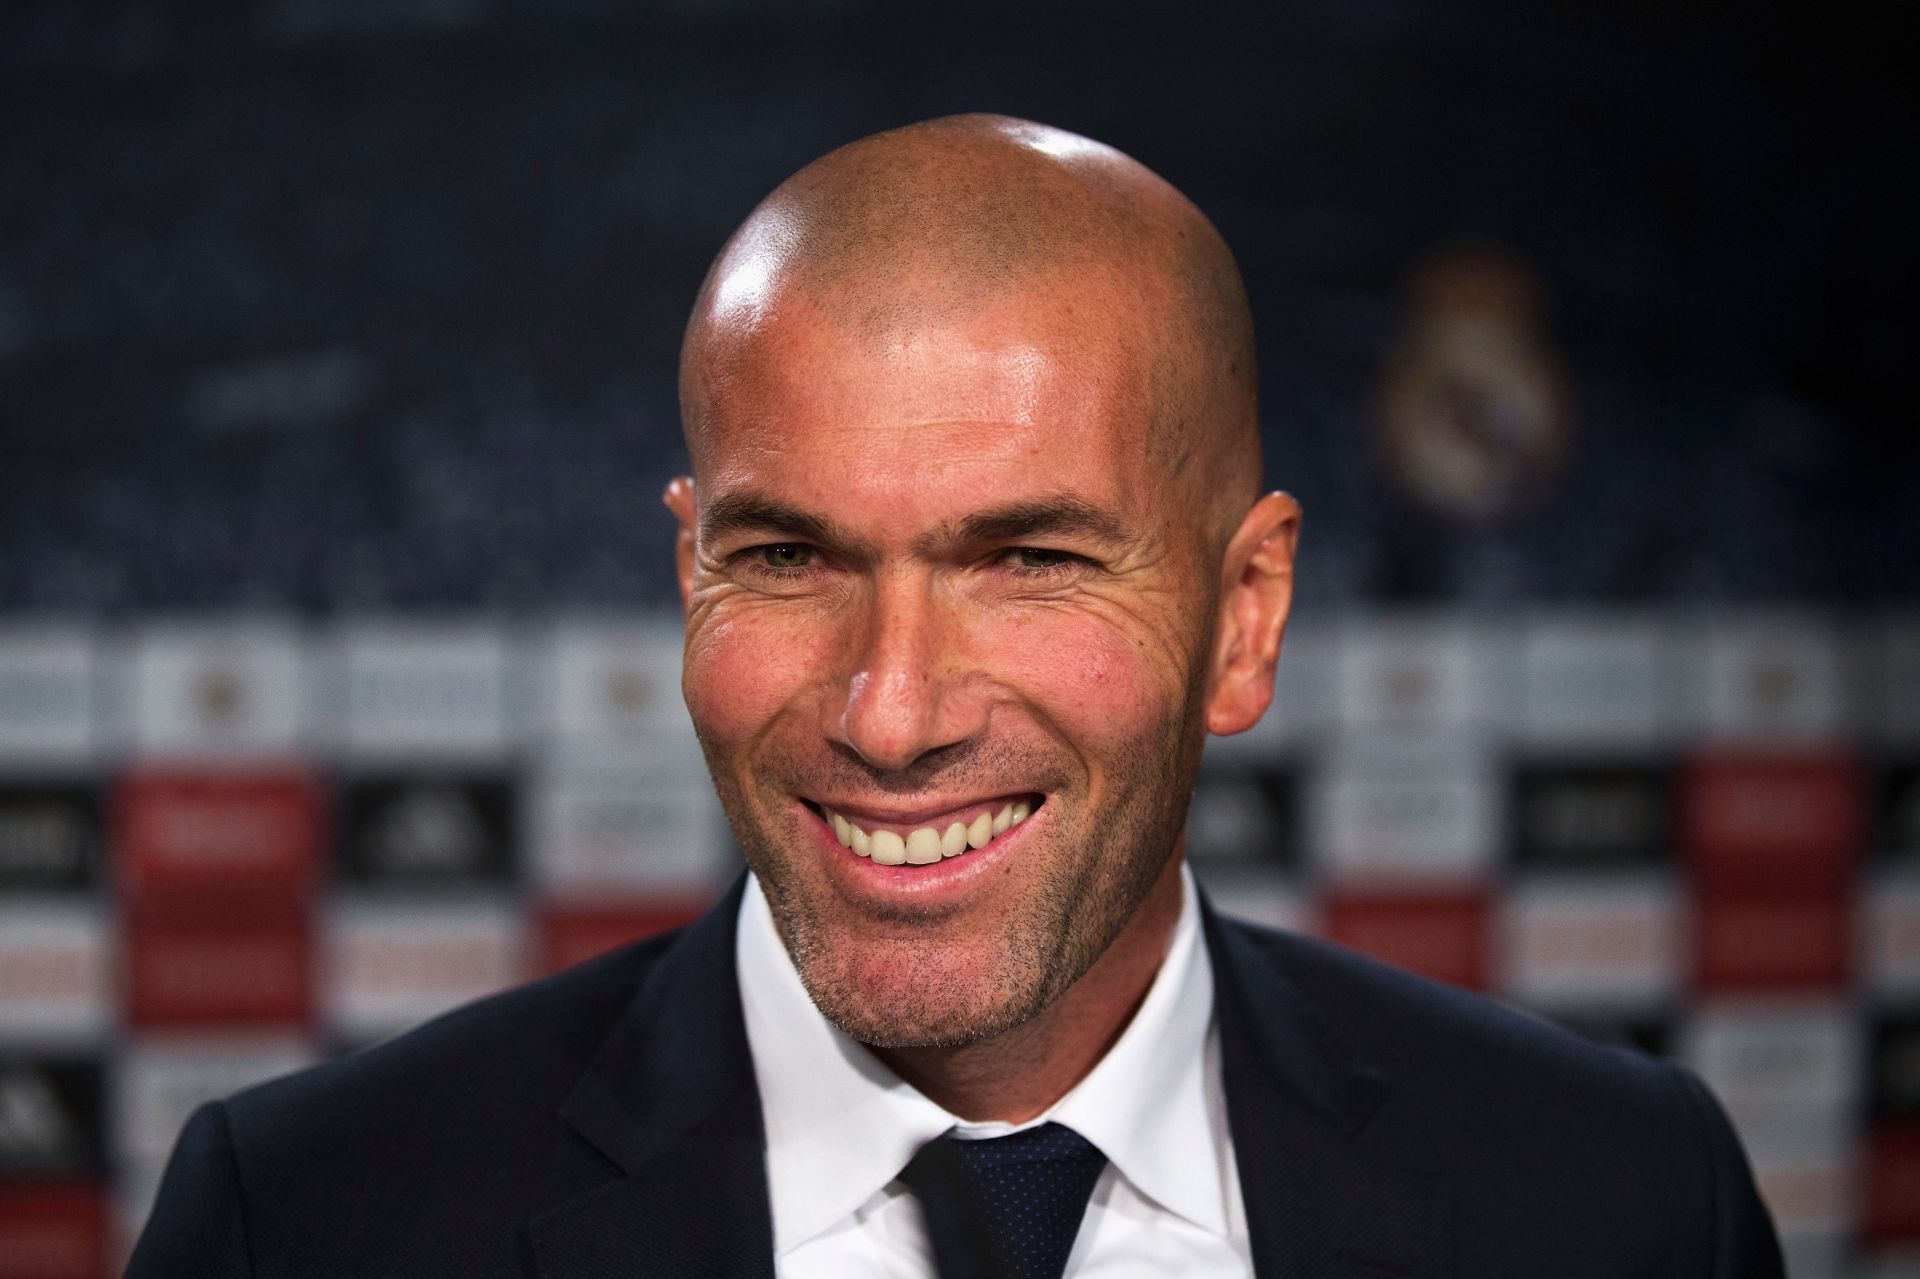 Zidane won three Champions League titles with Real Madrid.